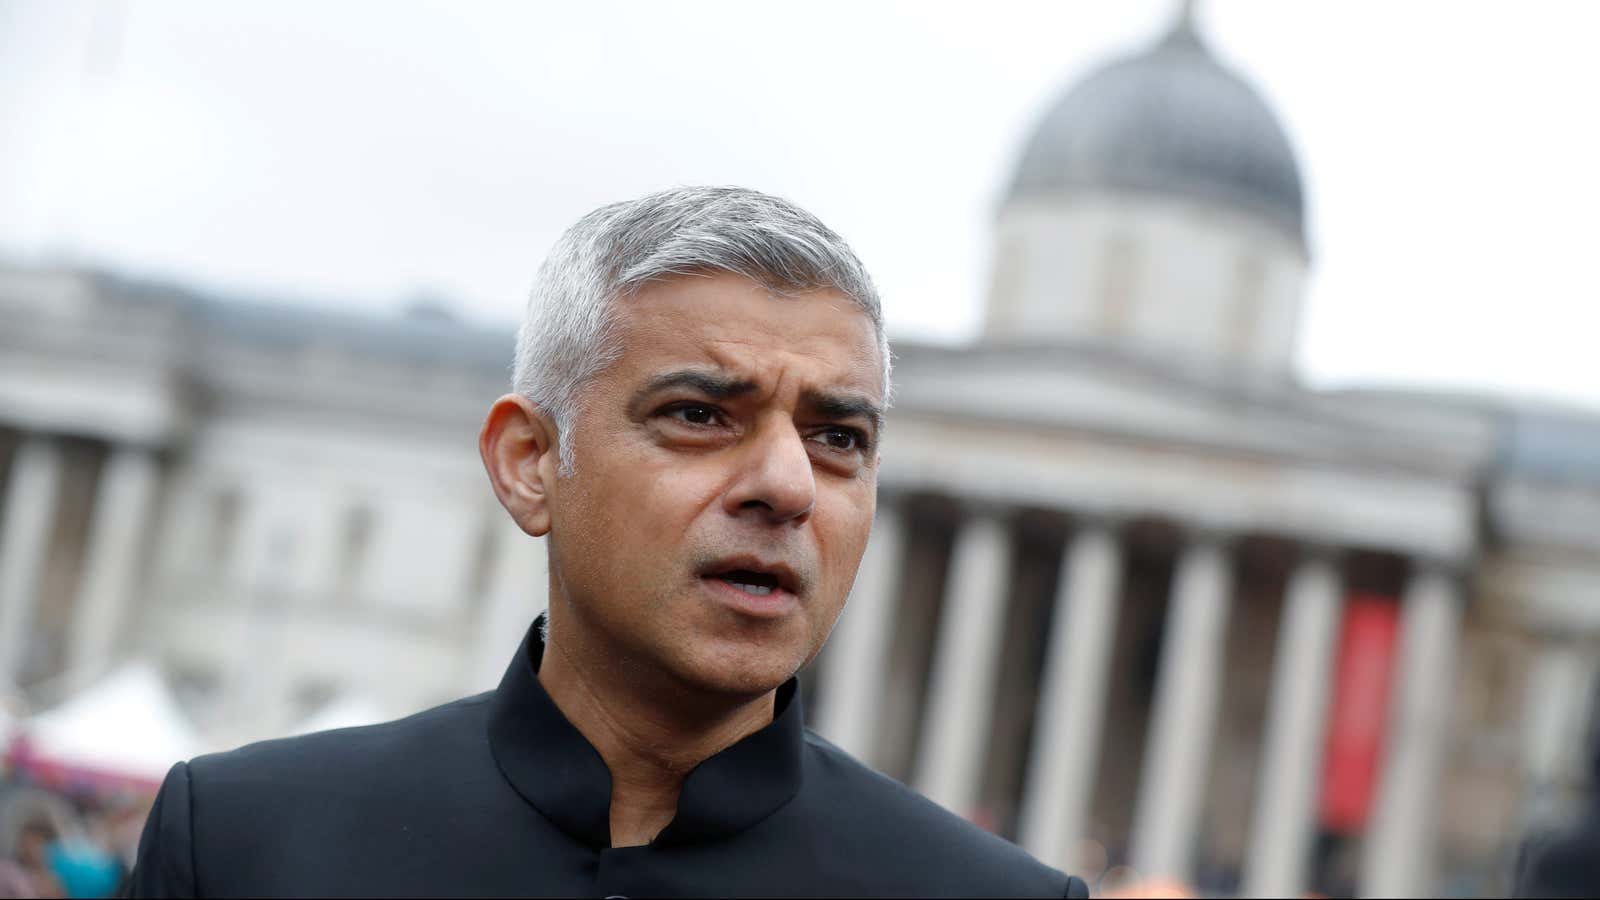 London mayor Sadiq Khan said he supports TfL’s decision.